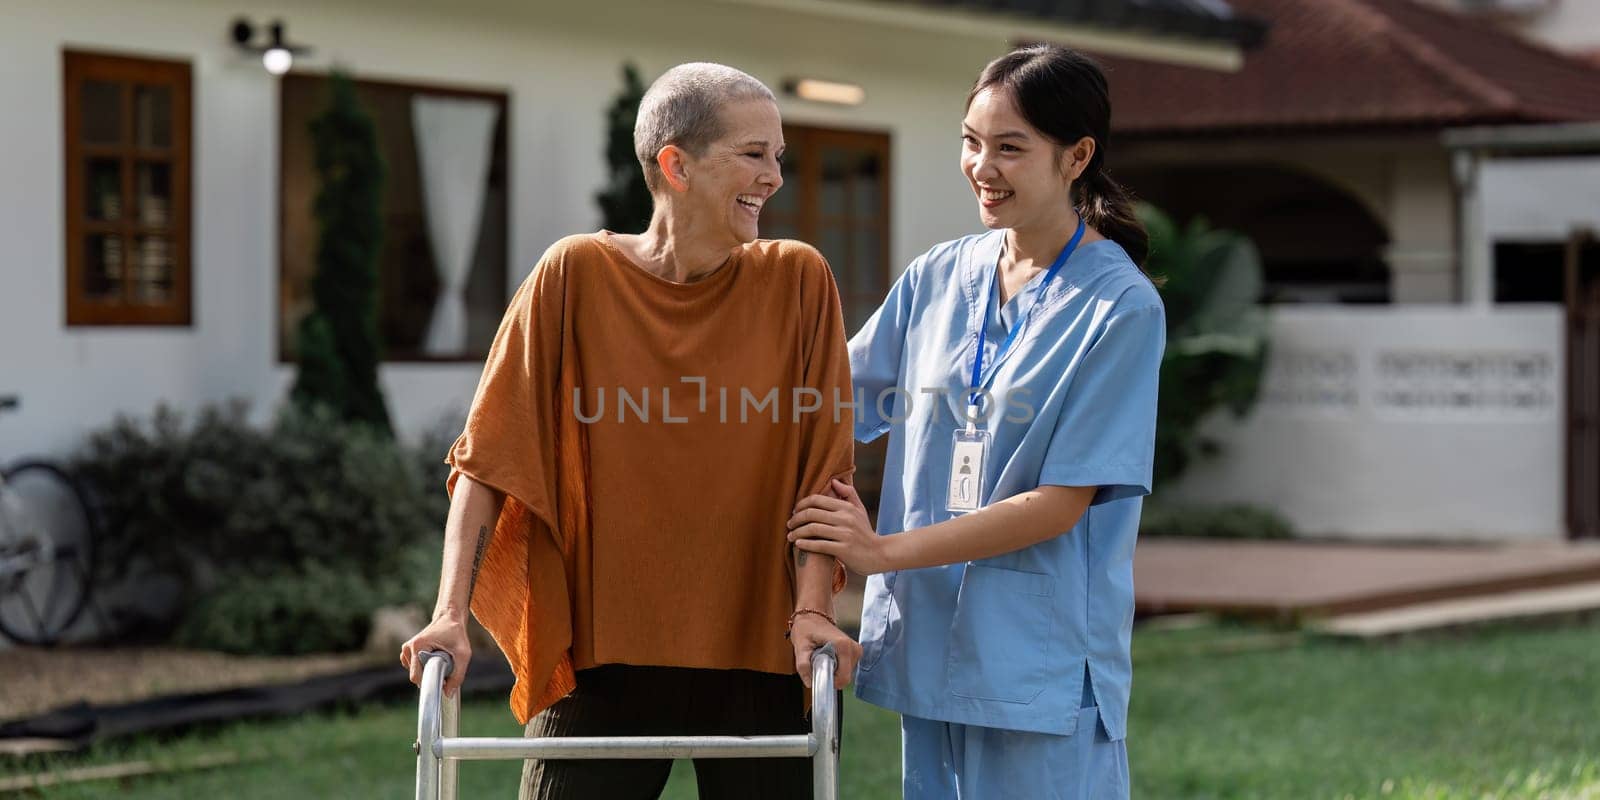 Nurse or caregiver help elderly walk by using walker in garden by itchaznong